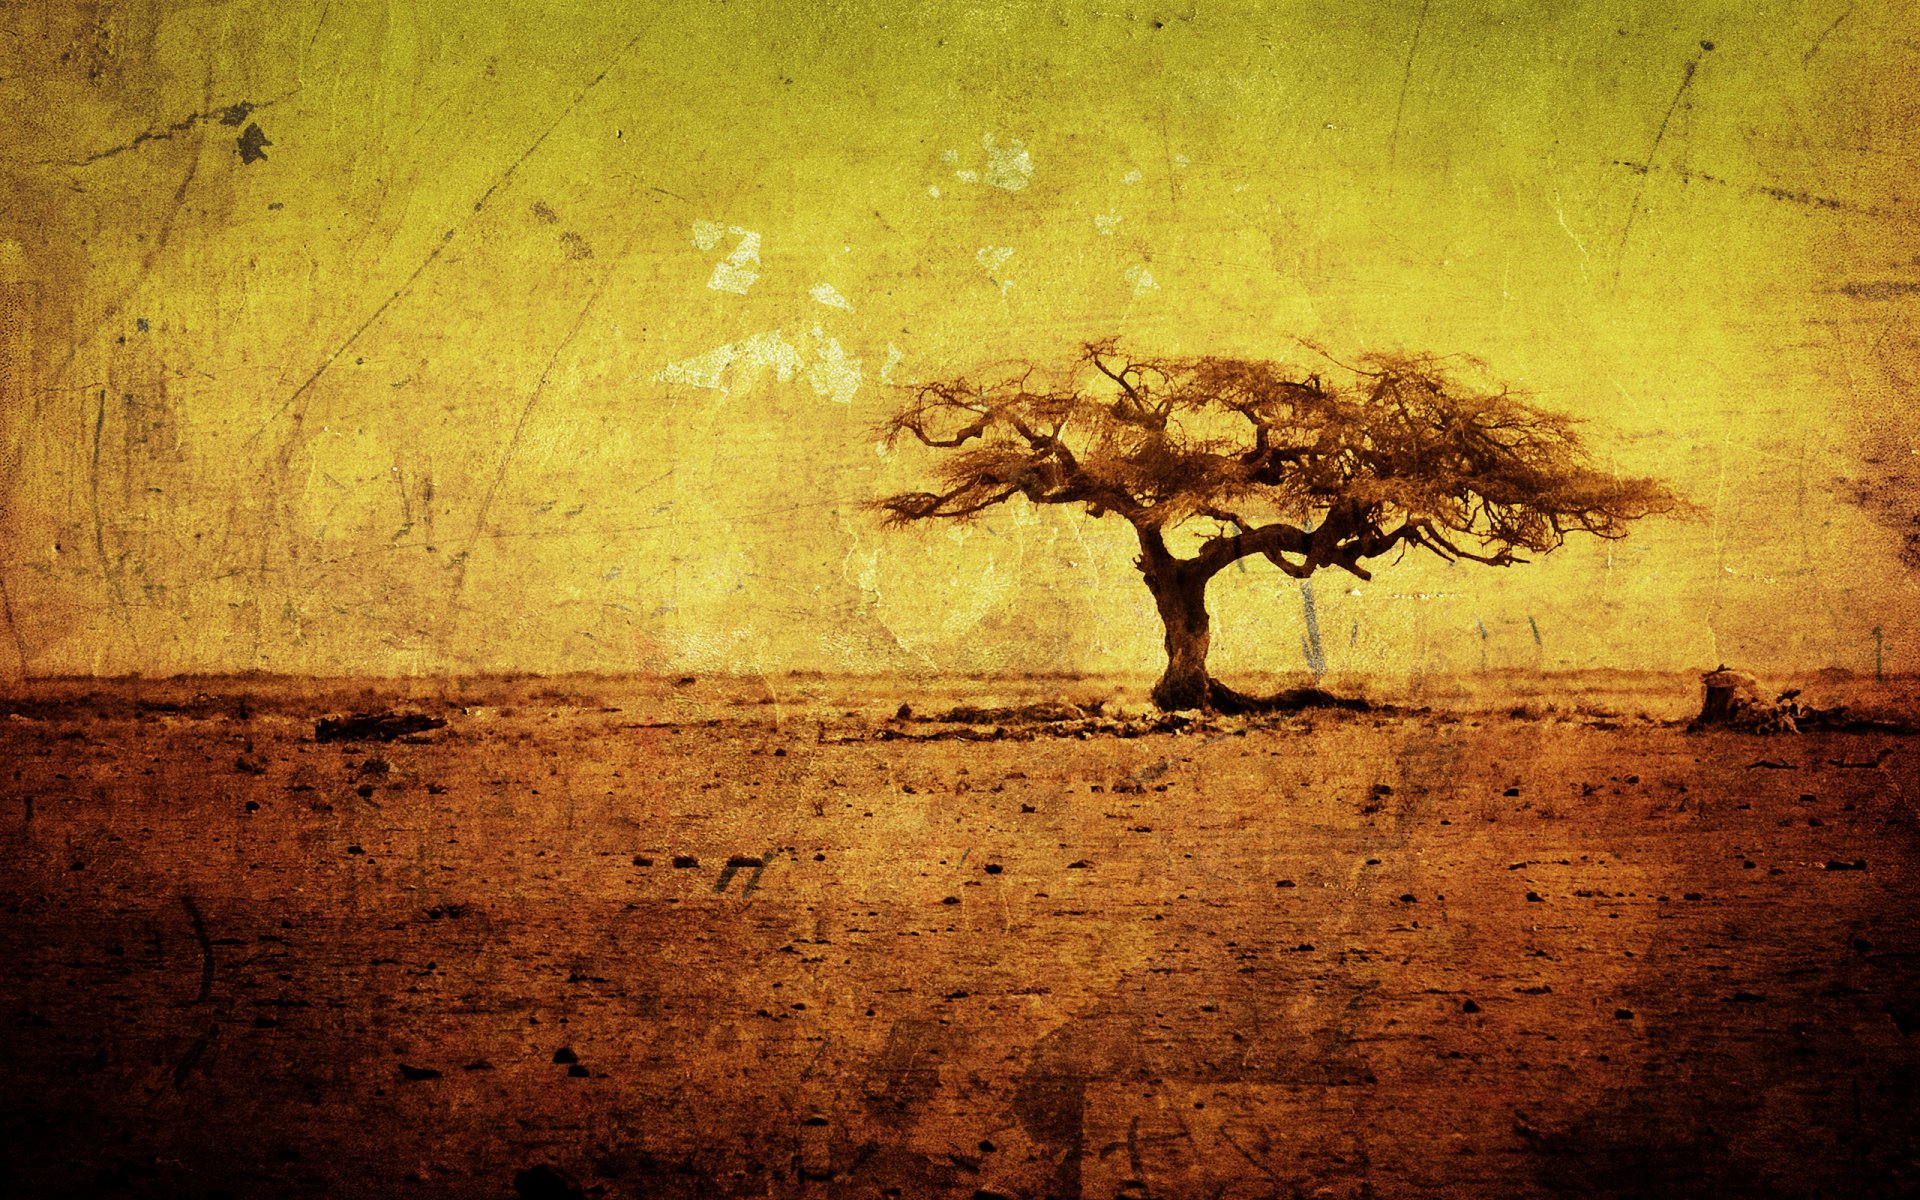 текстура текстуры дерево деревья африка грязь жара минимализм арт рисунок рисунки